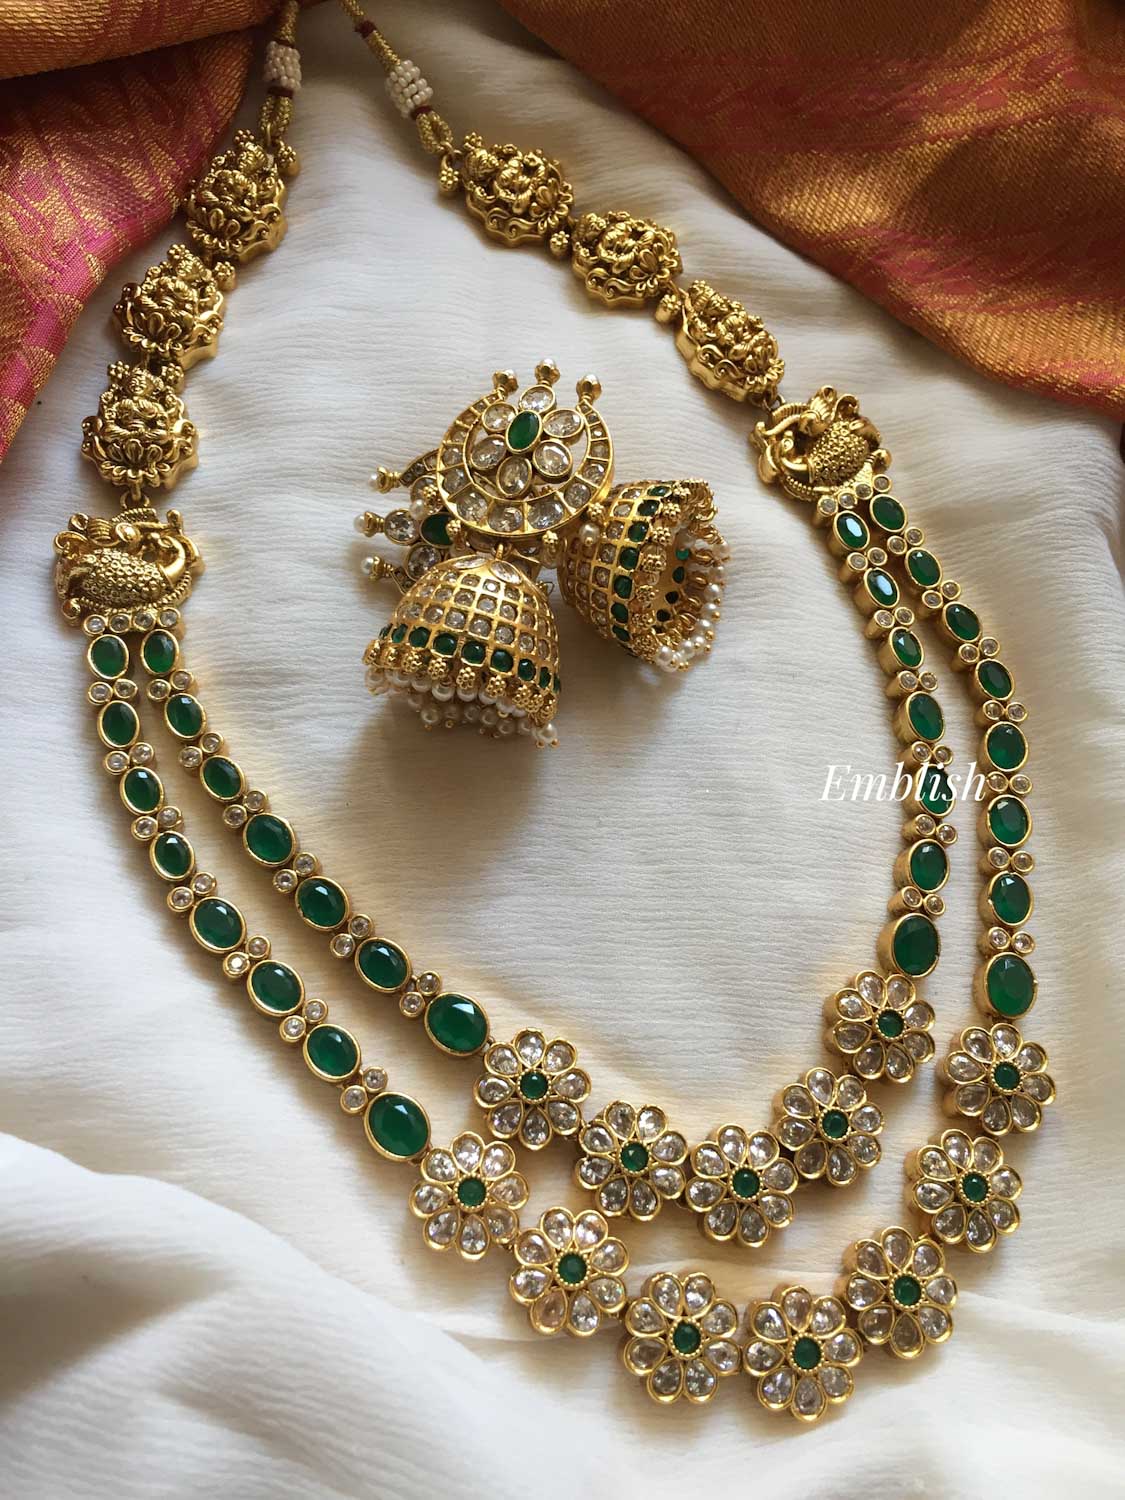 Double layer Lakshmi motif gold alike flower grand neckpiece 